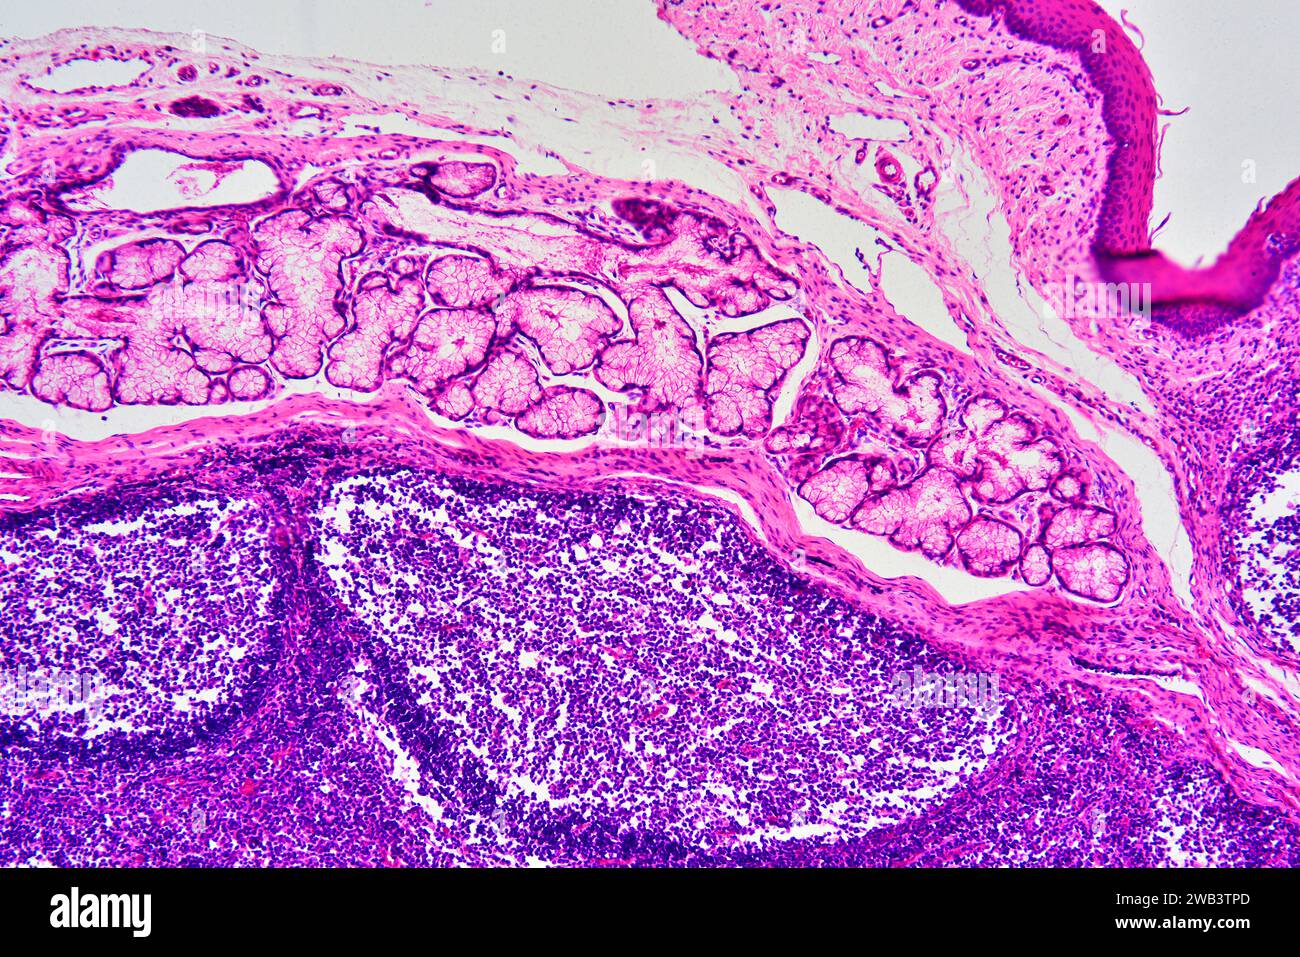 Glándula salival humana que muestra acini, parénquima y conductos secretores. X75 a 10 cm de ancho. Foto de stock